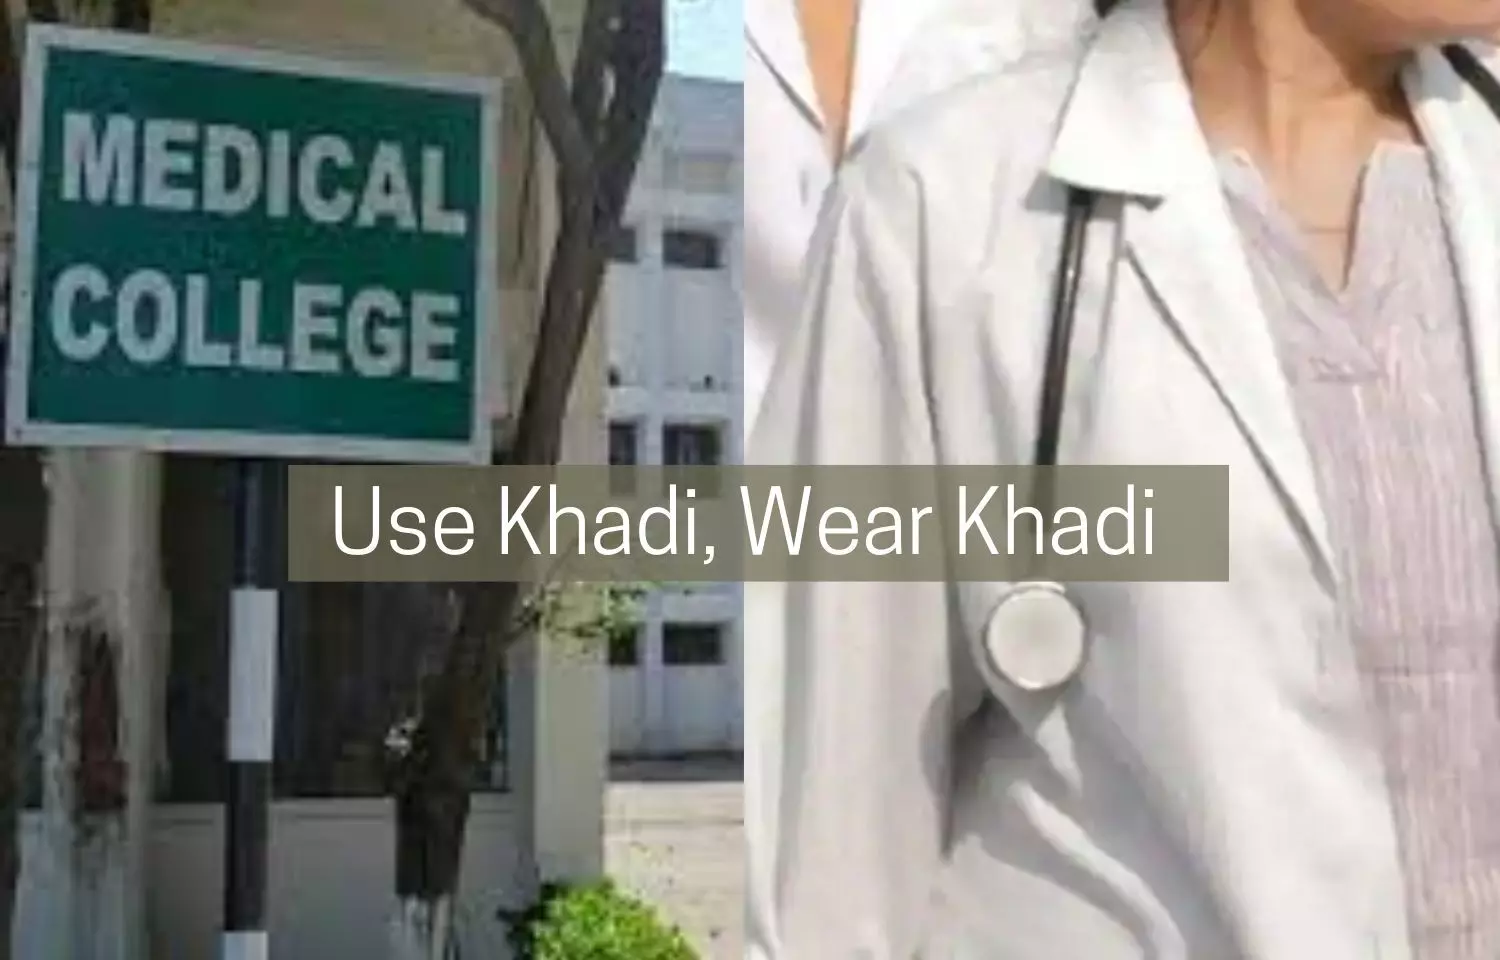 Use Khadi, Wear Khadi: NMC advises Doctors, Medical Colleges, Hospitals